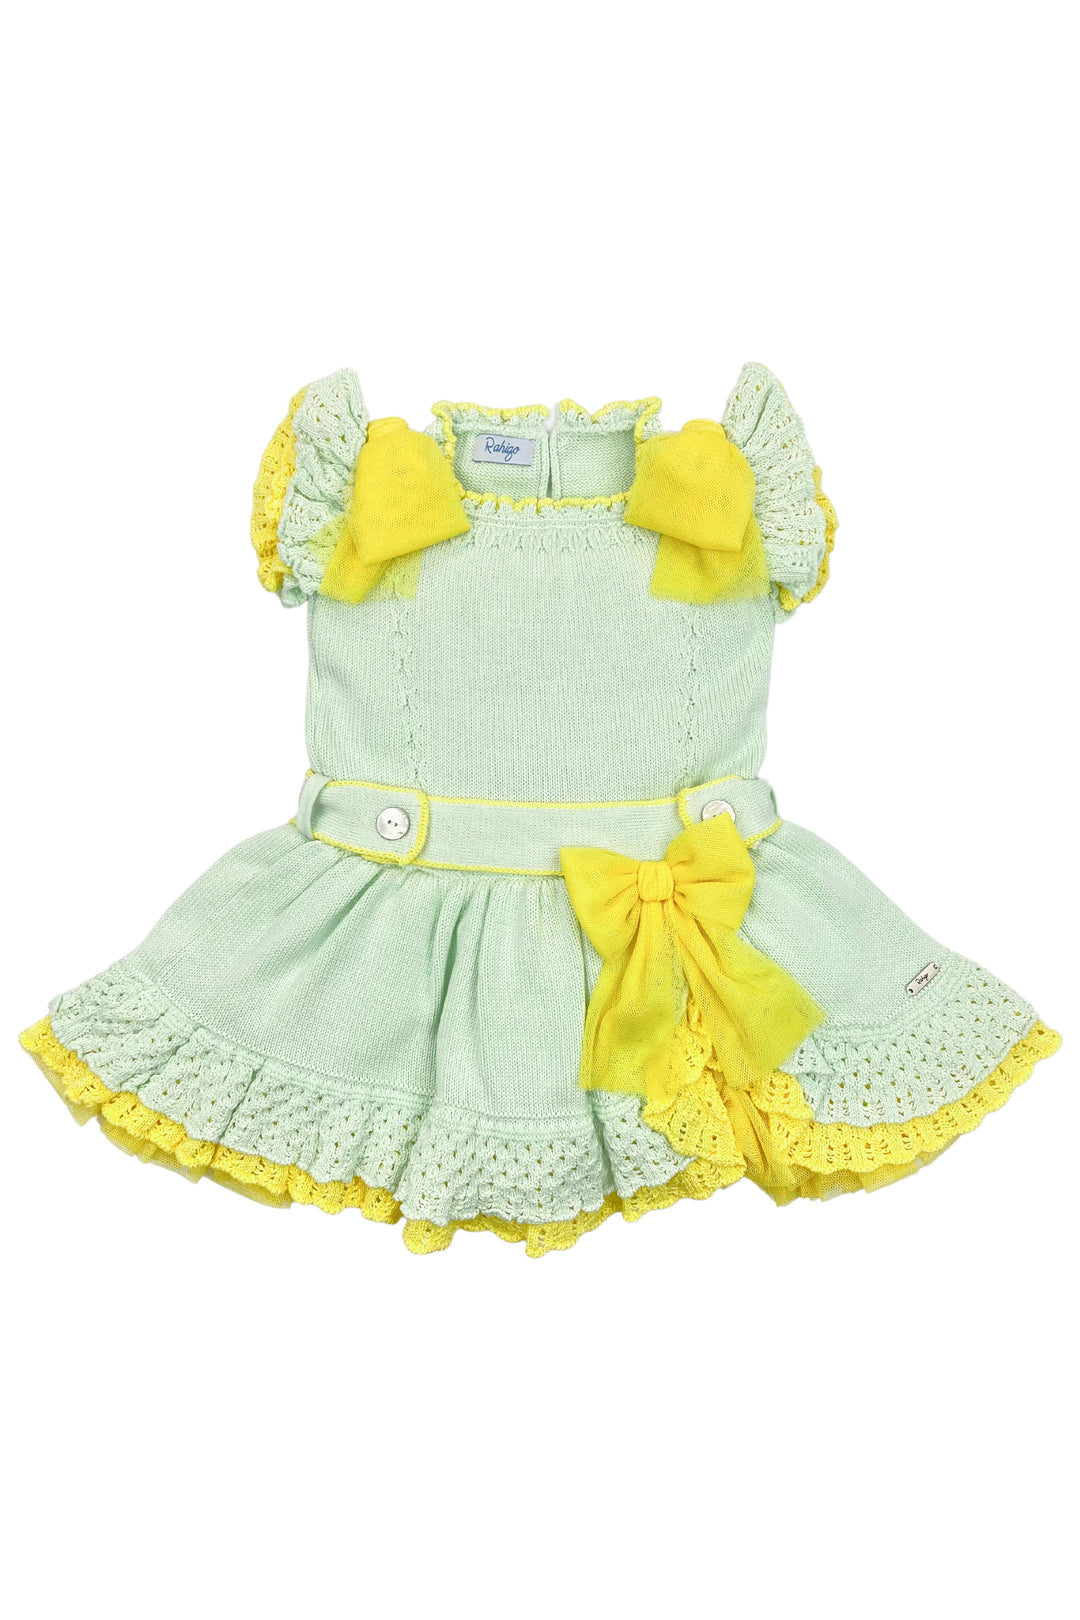 Rahigo "Ava" Mint & Yellow Knit Tulle Dress | Millie and John